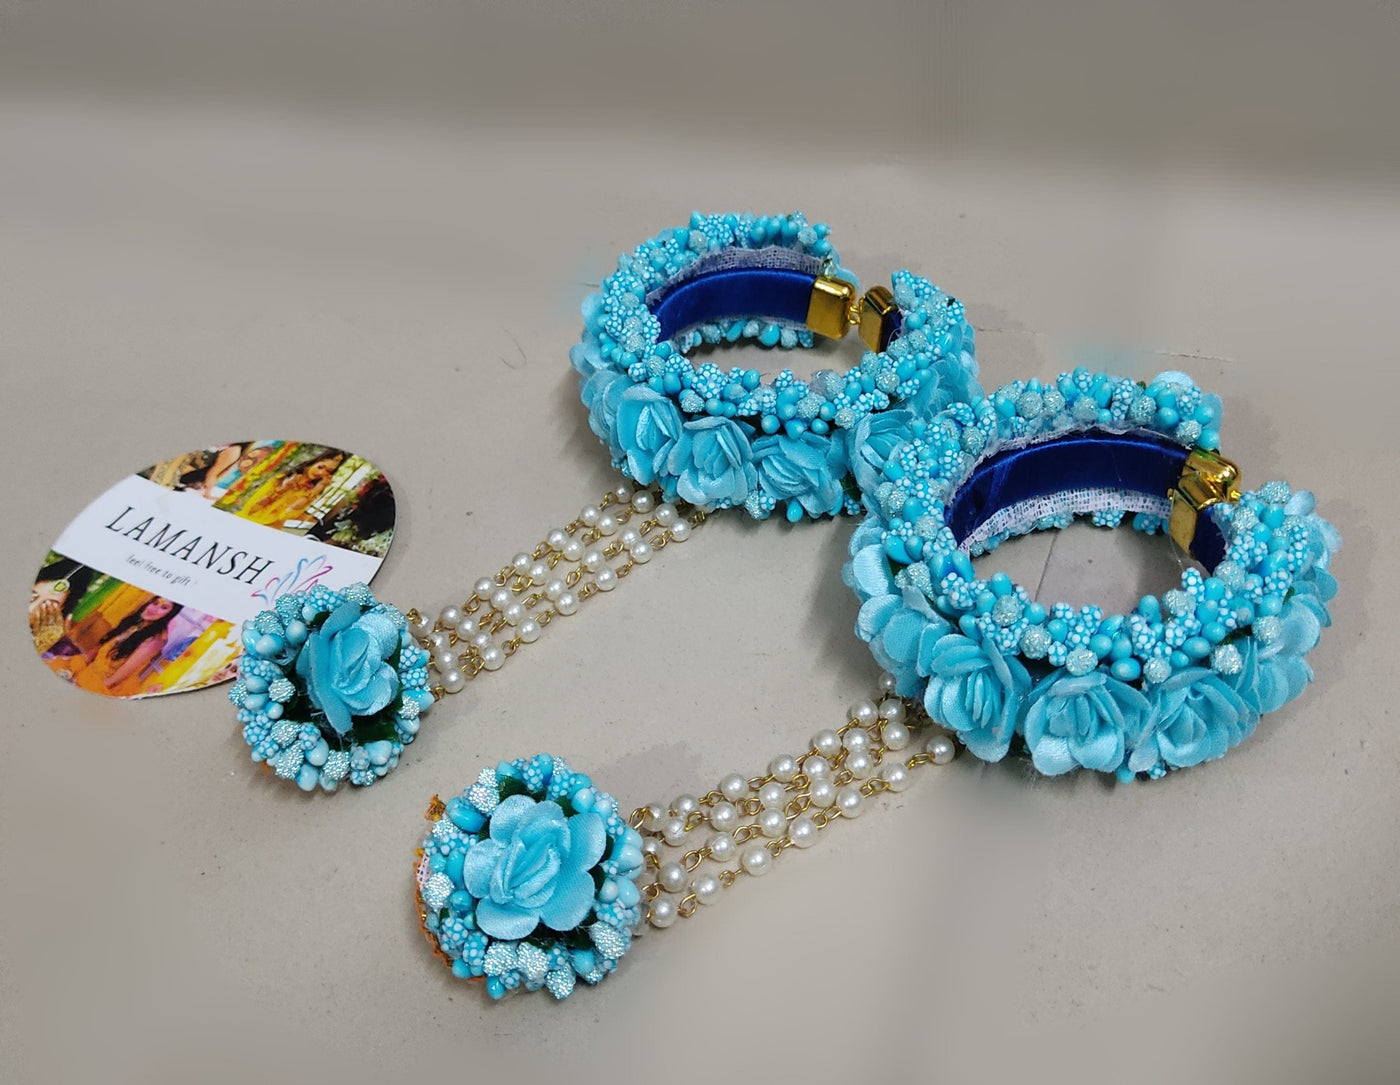 LAMANSH Floral 🌺 Giveaways LAMANSH Floral 🌺 Bracelets Attached to Ring | Artificial Fabric Flower Hathphoold for Haldi & Mehendi ceremony